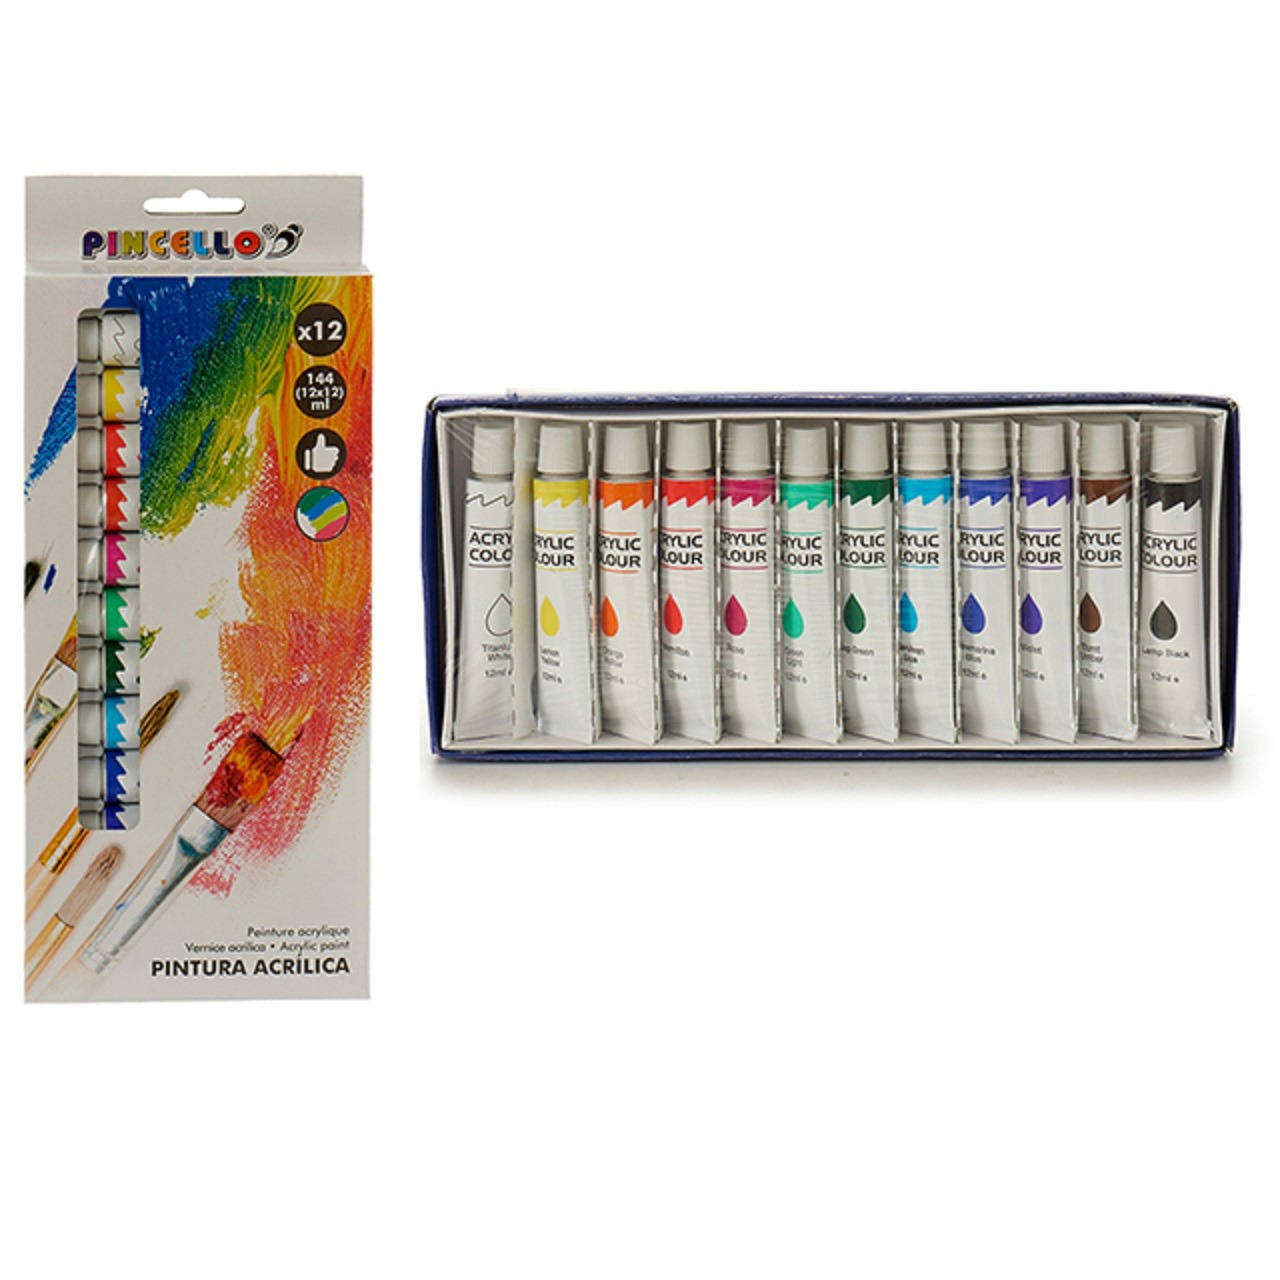 Acryl hobby/knutselen verf tubes 12 kleuren in tubes van 12 ml